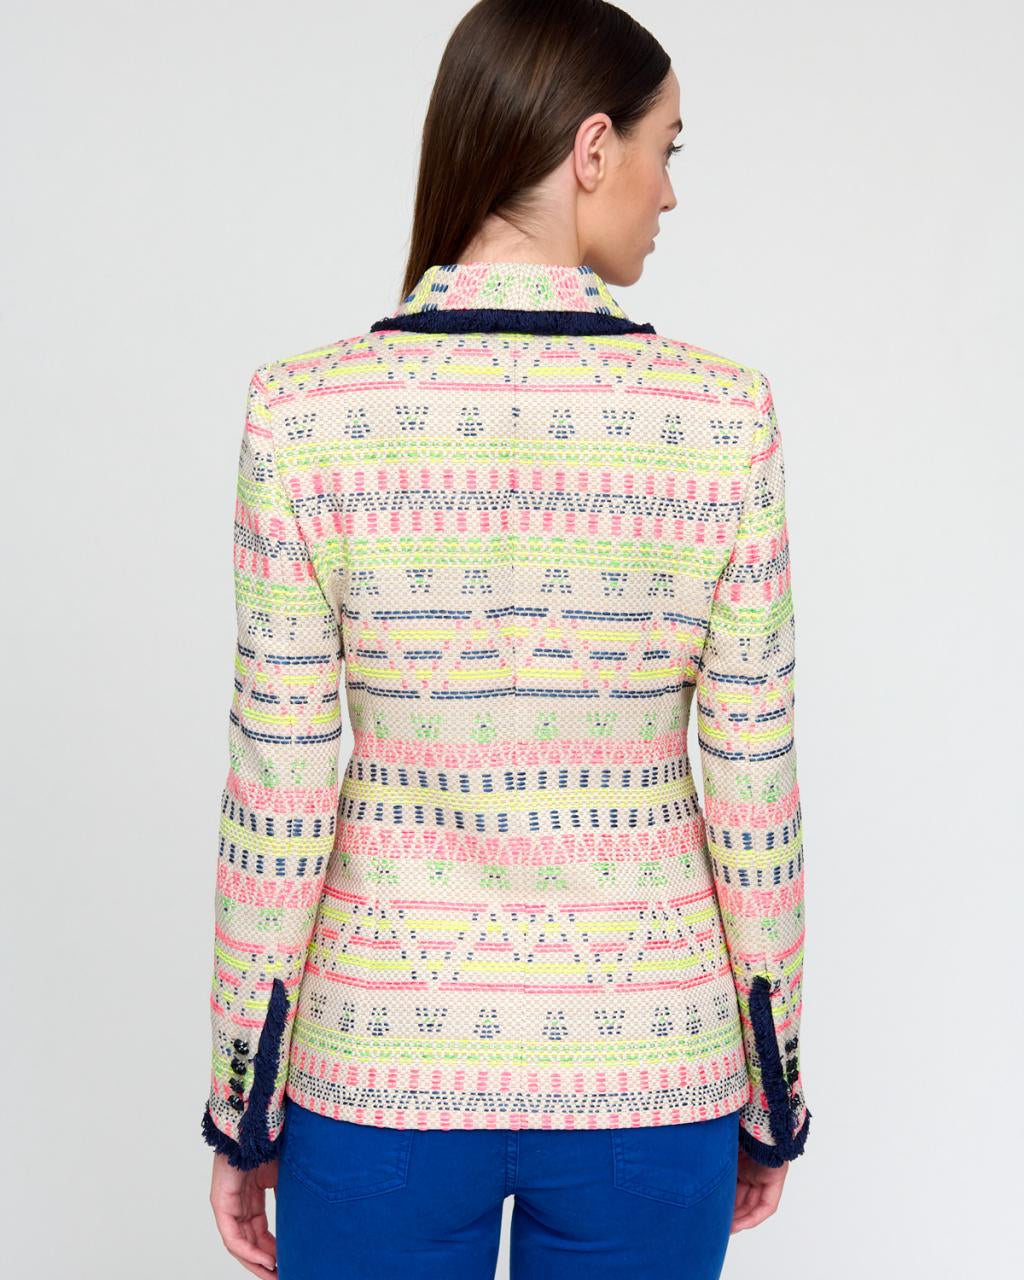 Bariloche Cortegana Tweed Style Ethnic Print Blazer From The Back